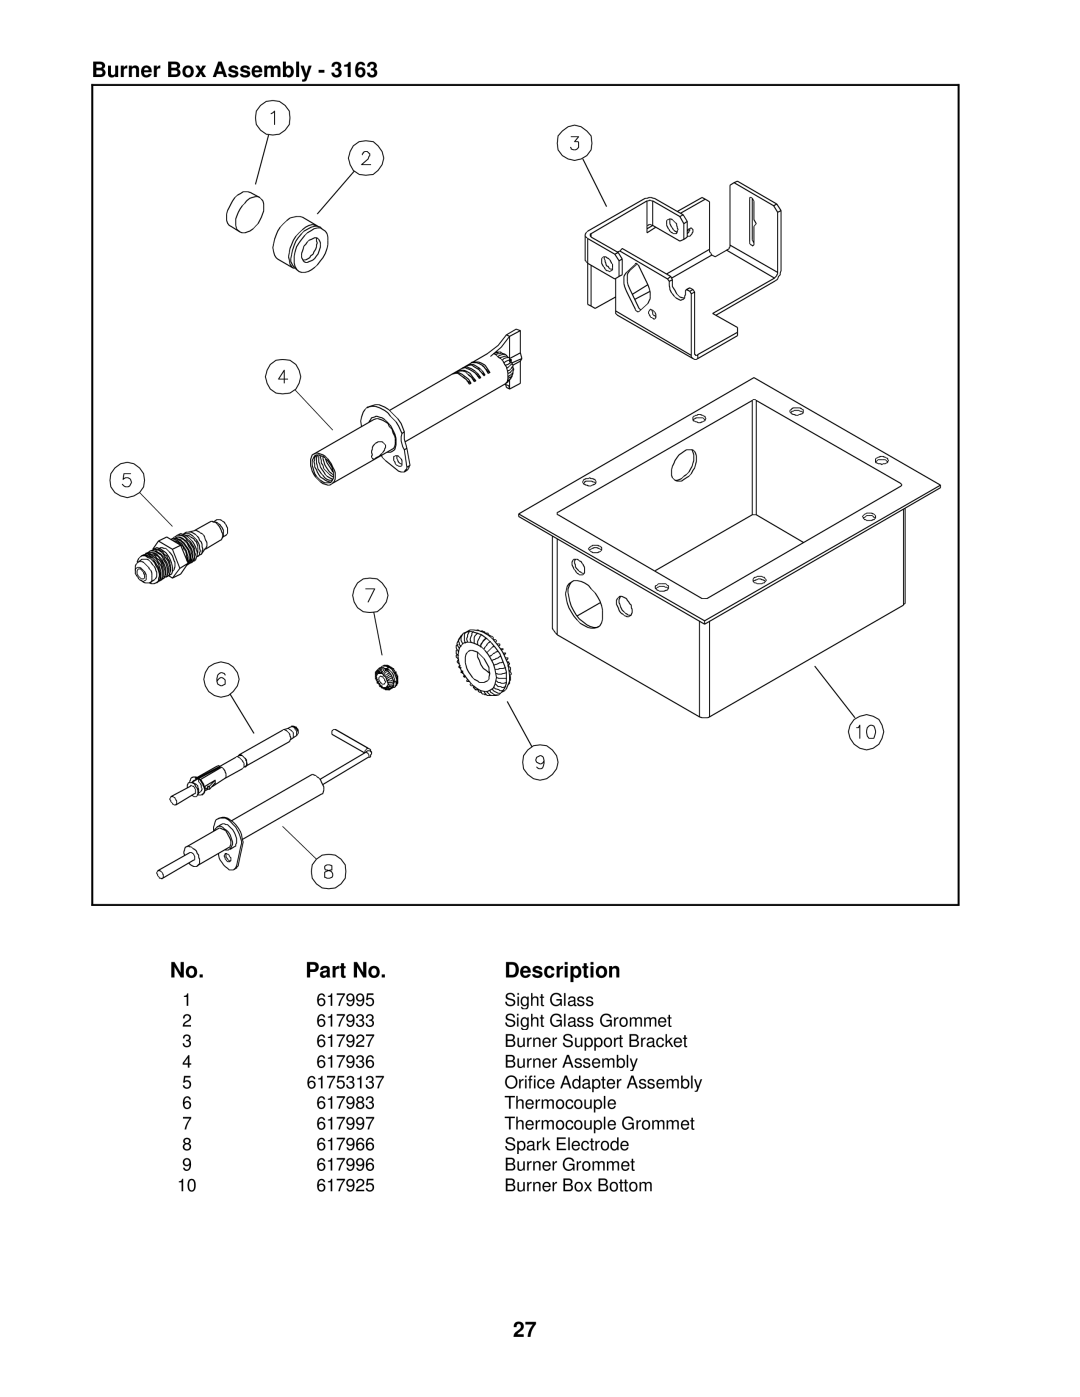 Bryant 3163 service manual Burner Box Assembly, Description 